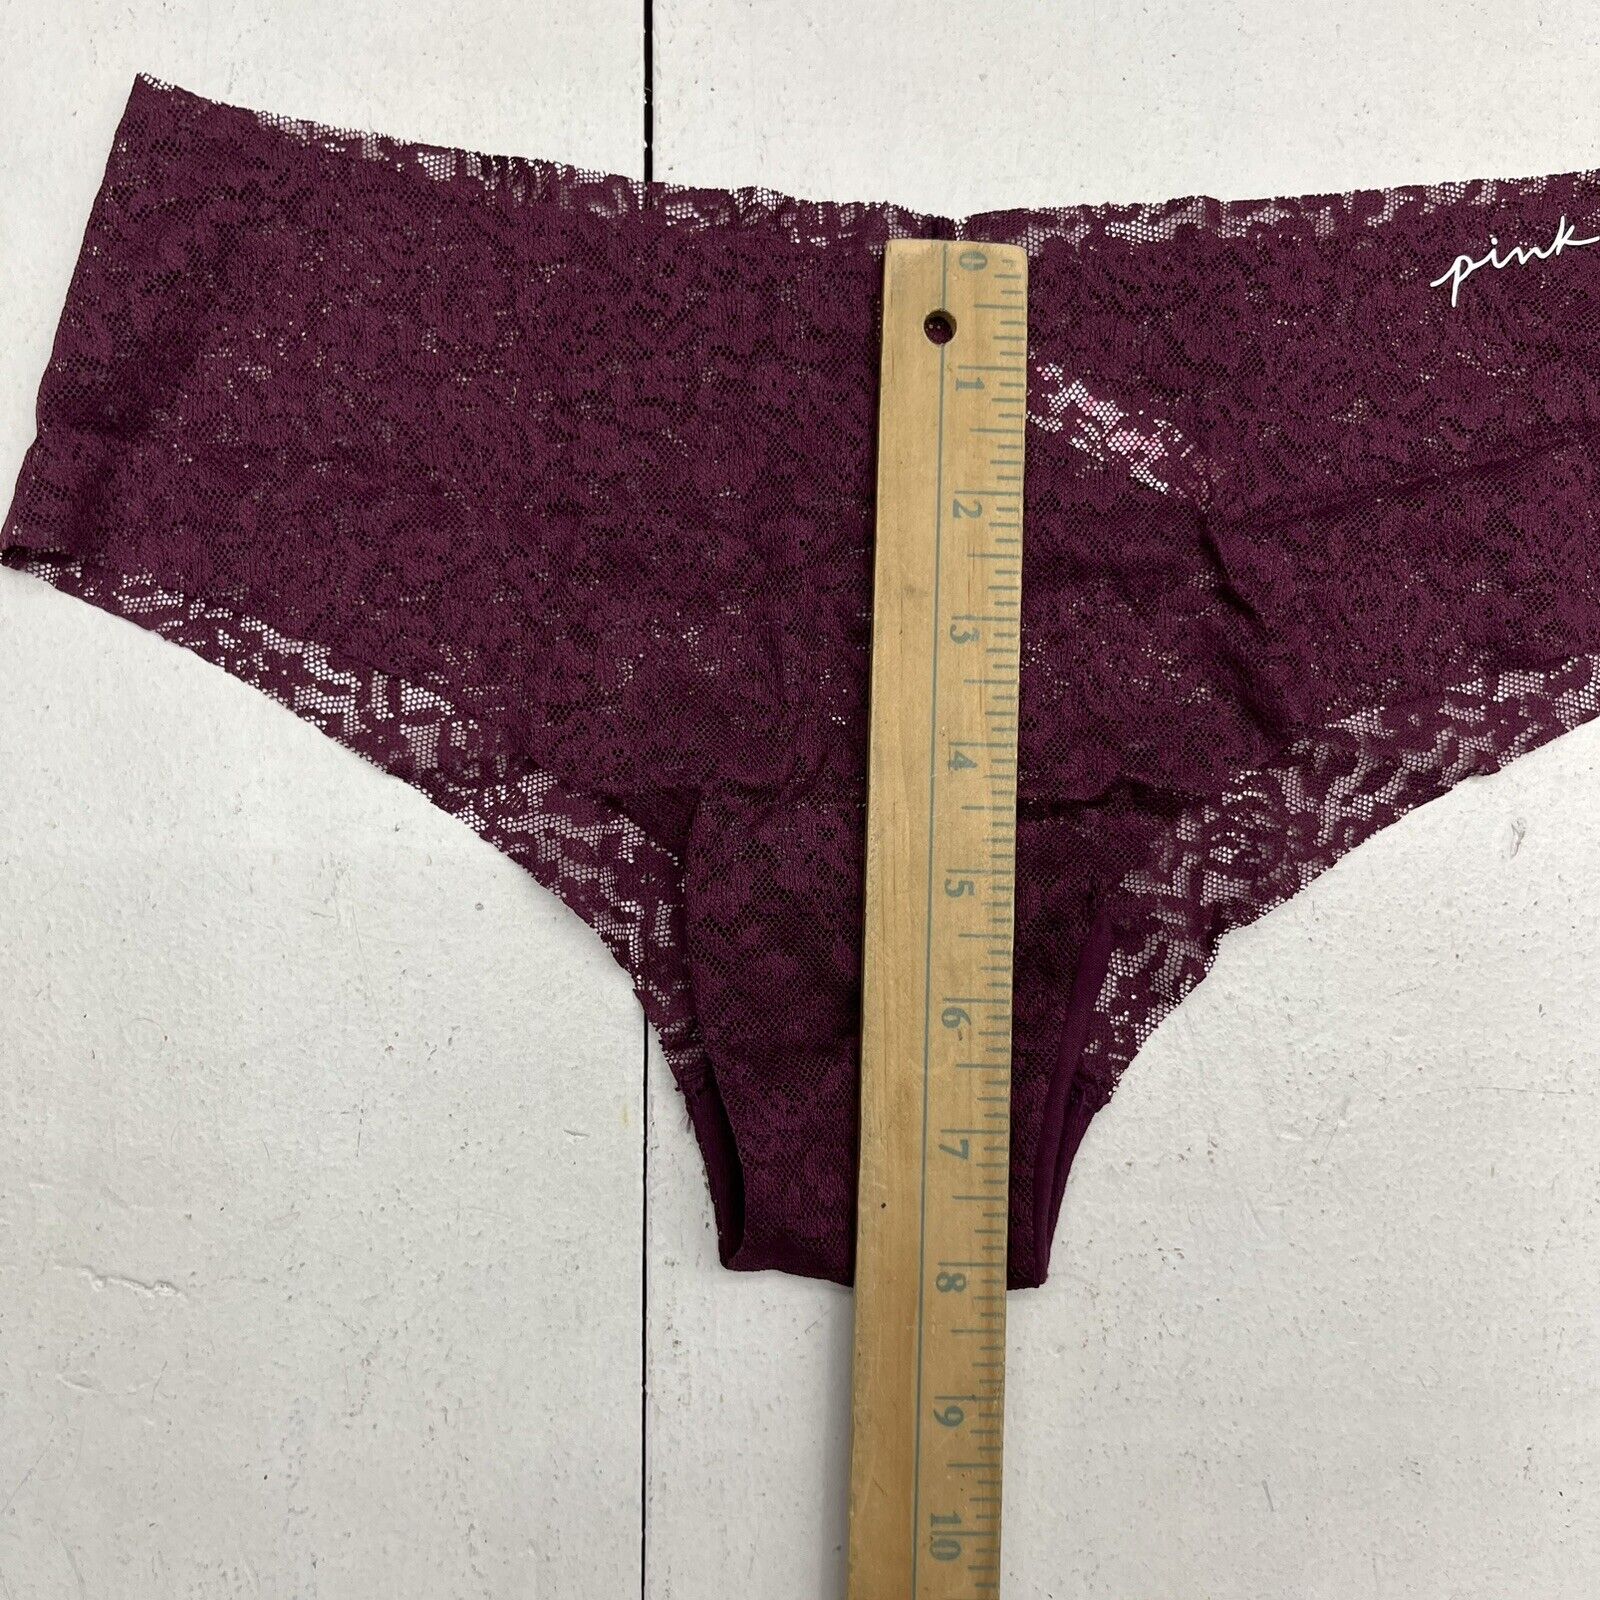 PINK Plum Purple Lace Cheeky Panties Women's Size Large NEW